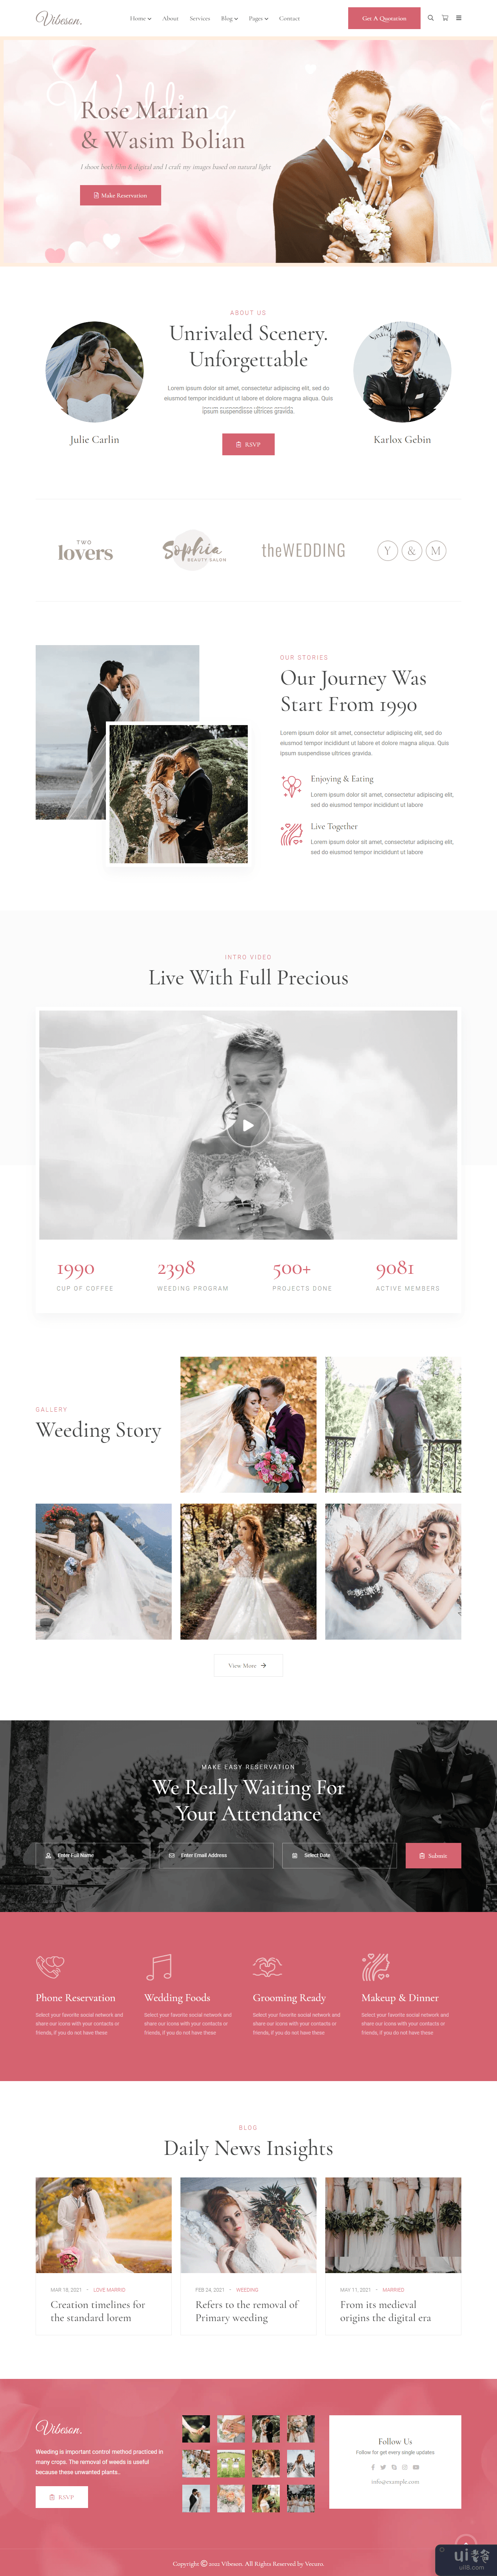 婚礼策划师活动摄影 HTML 模板(Wedding Planner Event Photography HTML Template)插图